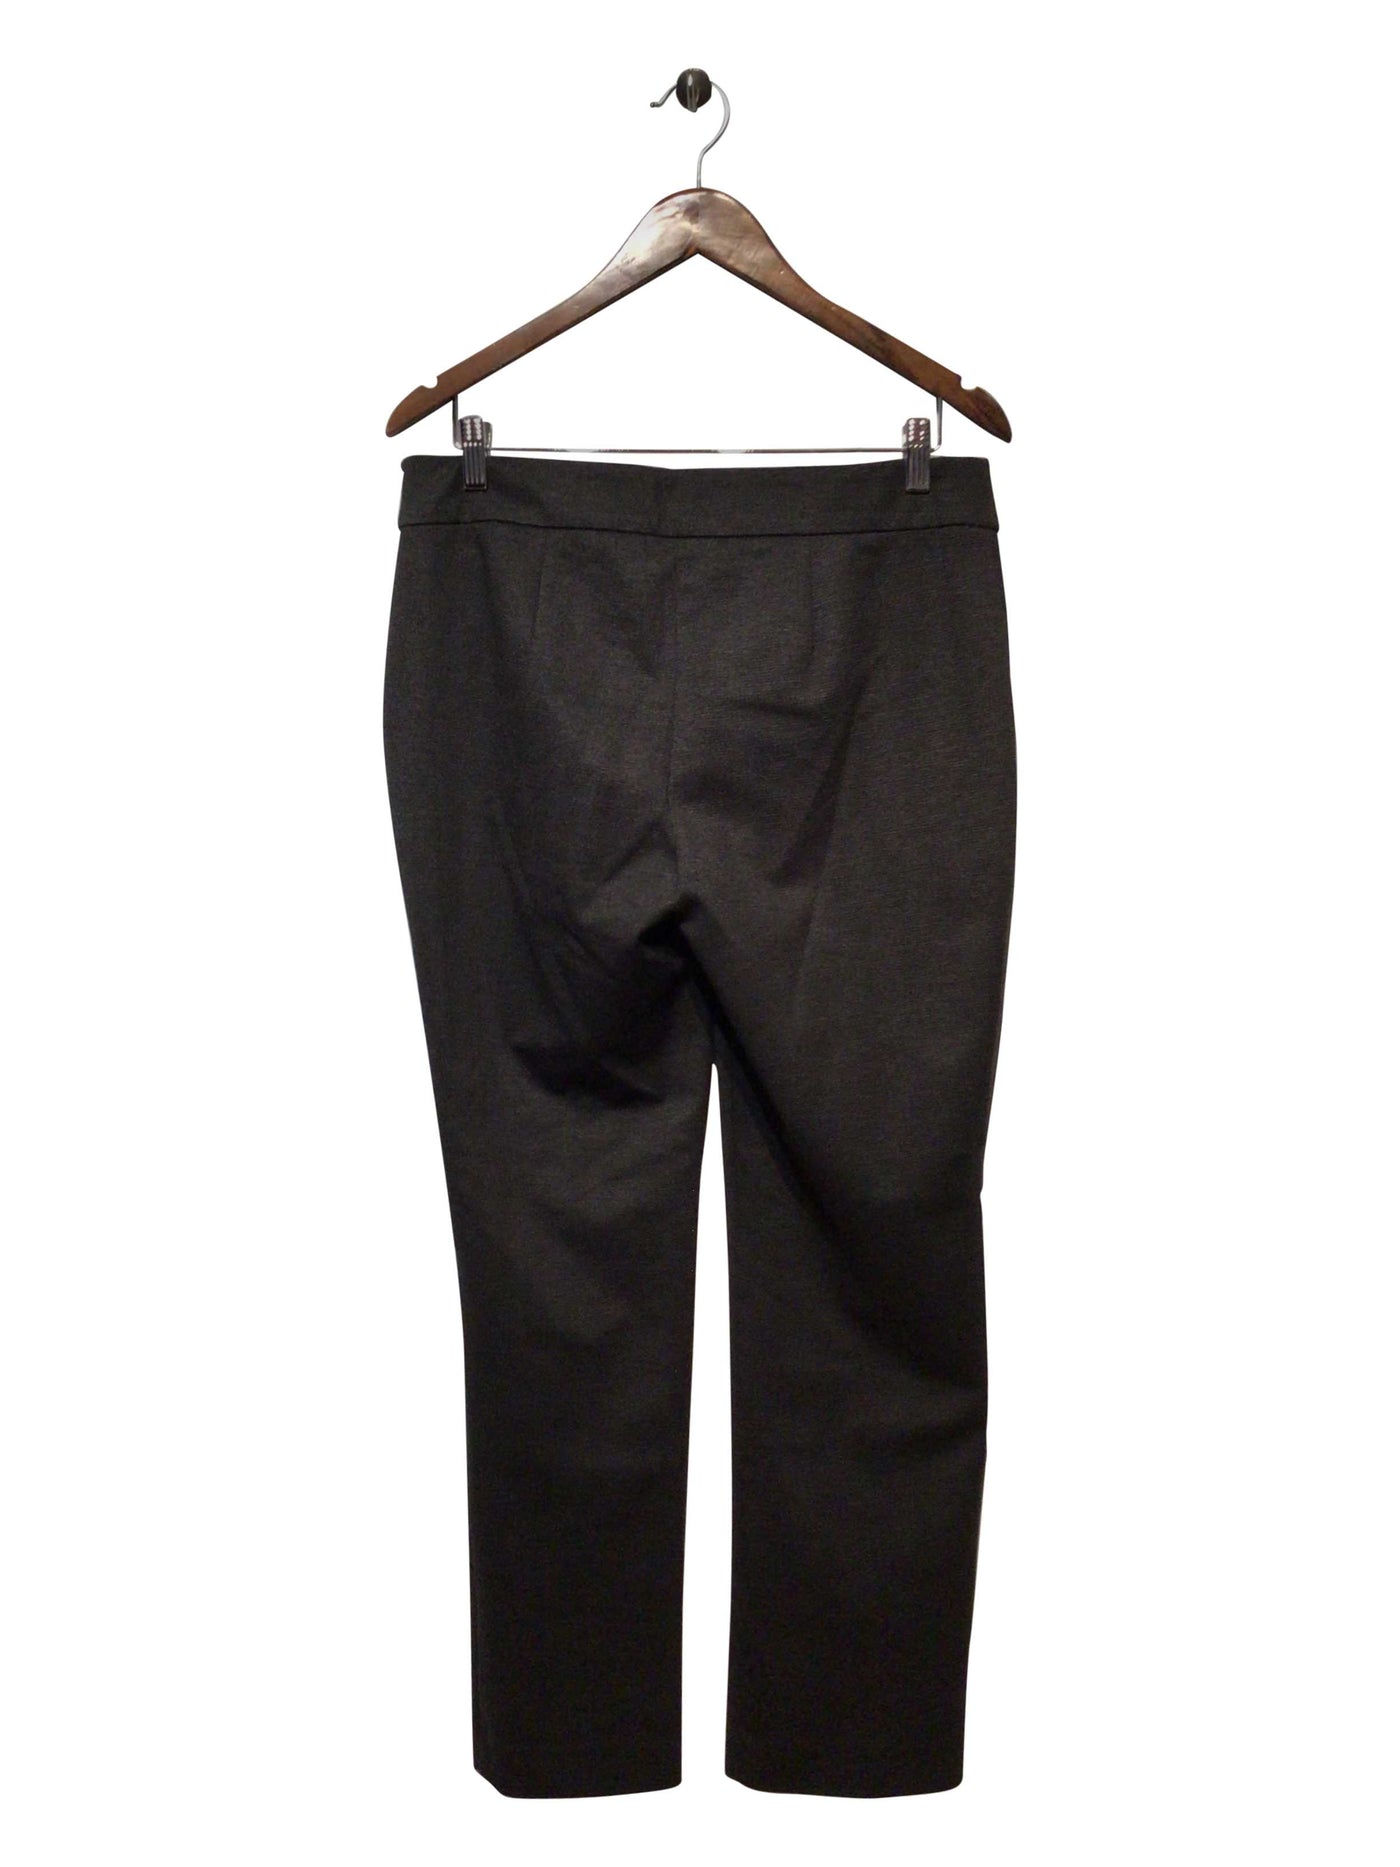 CHATEAU Regular fit Pant in Gray  -  8  13.99 Koop